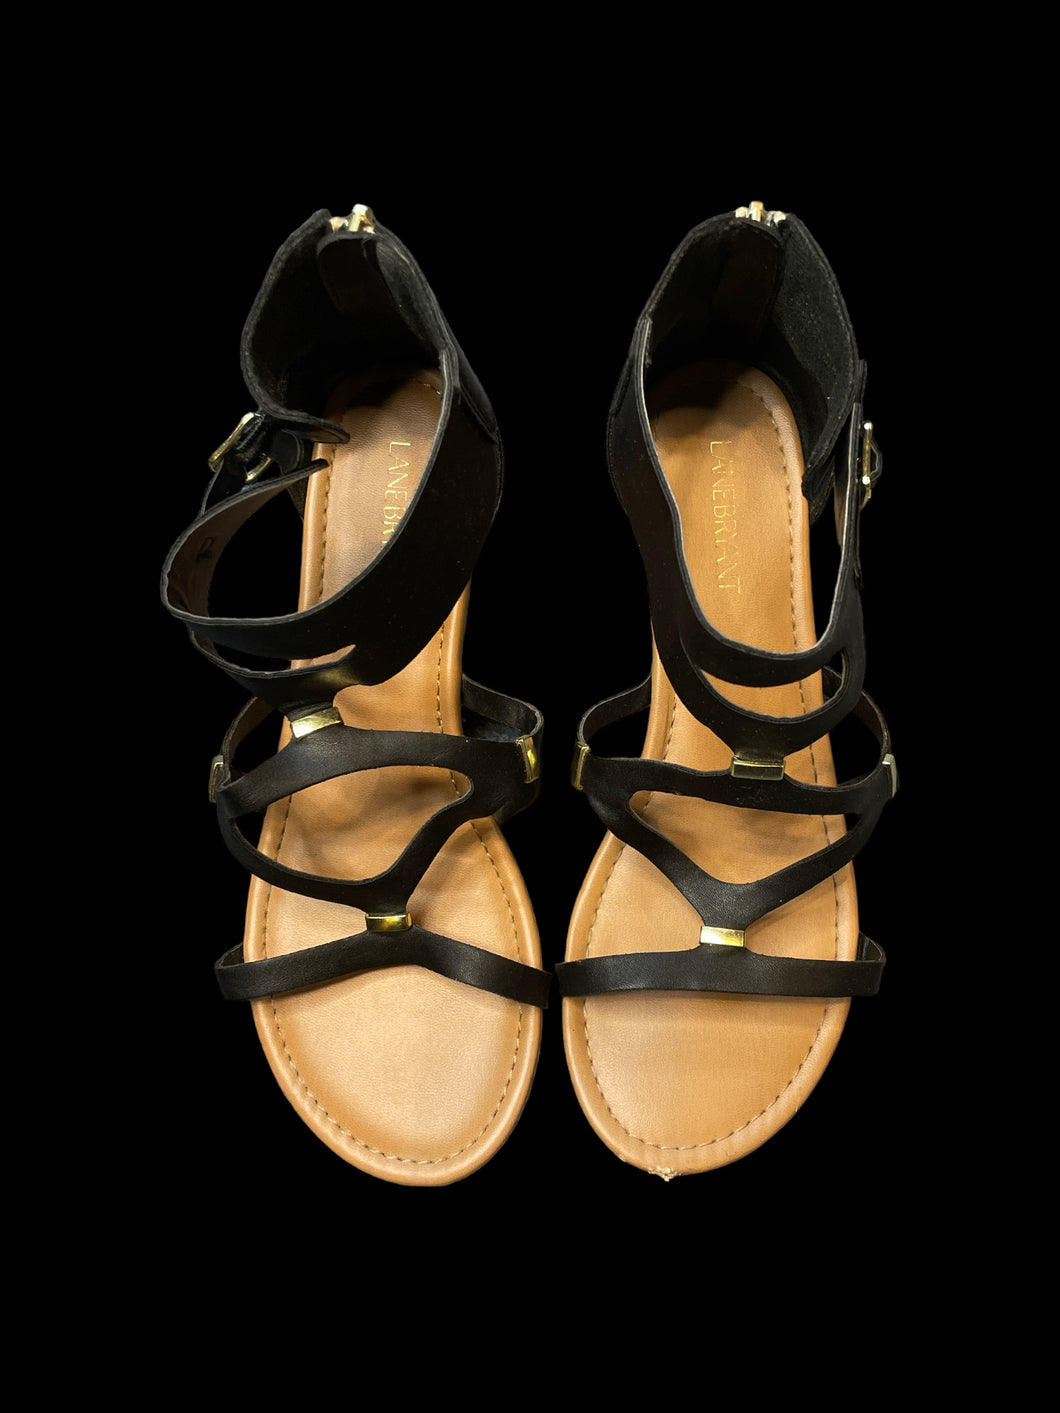 10W Black strappy sandals w/ gold-like details, heel zipper, & buckles